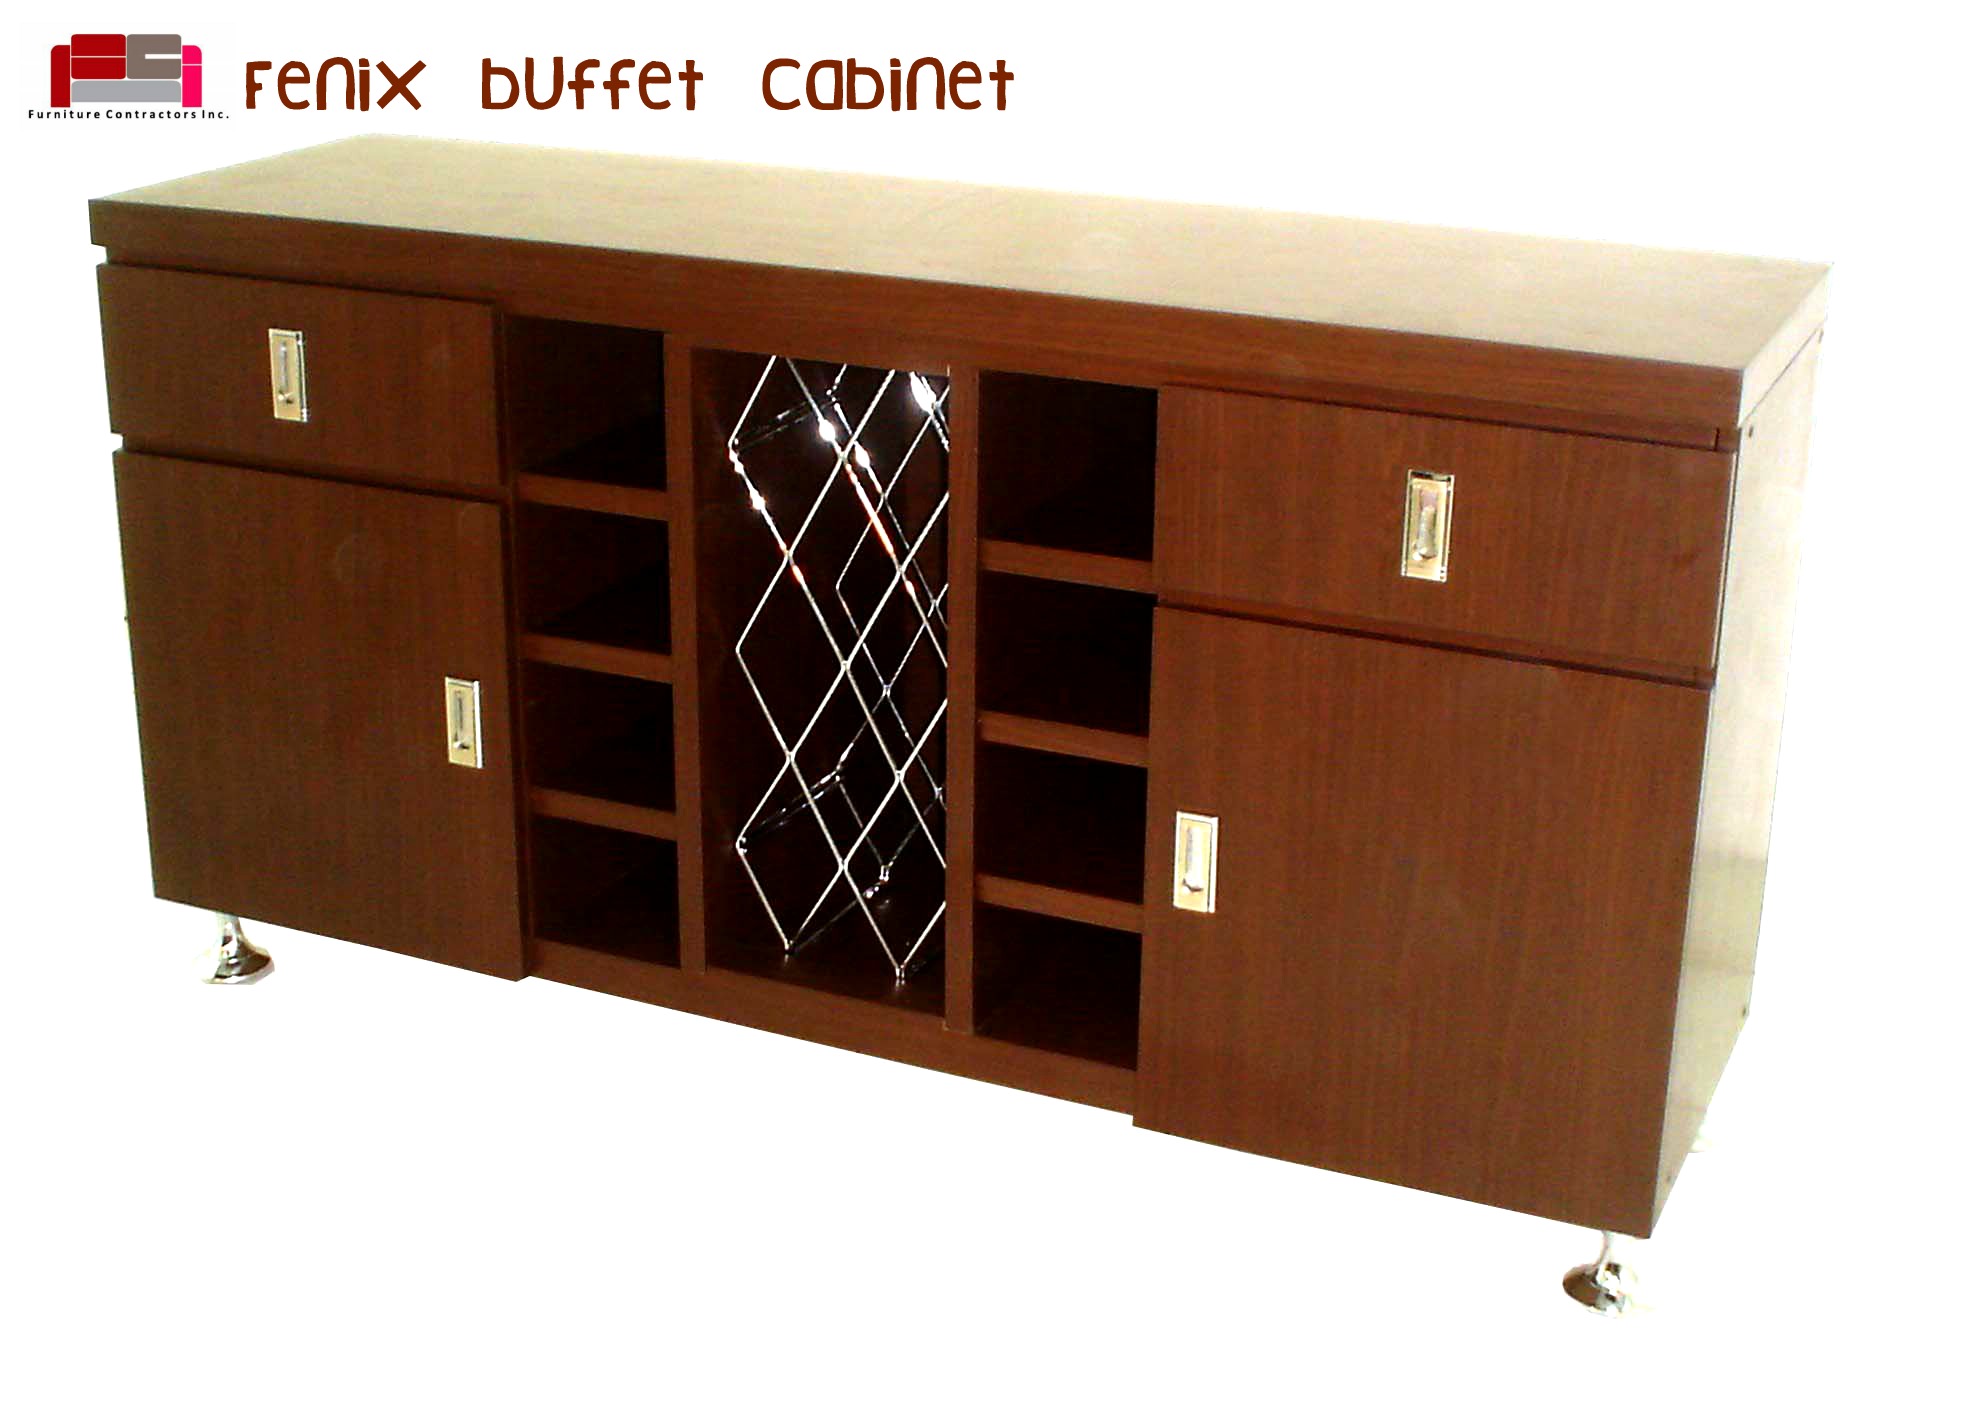 Buffet Cabinet Furniture Contractors Inc